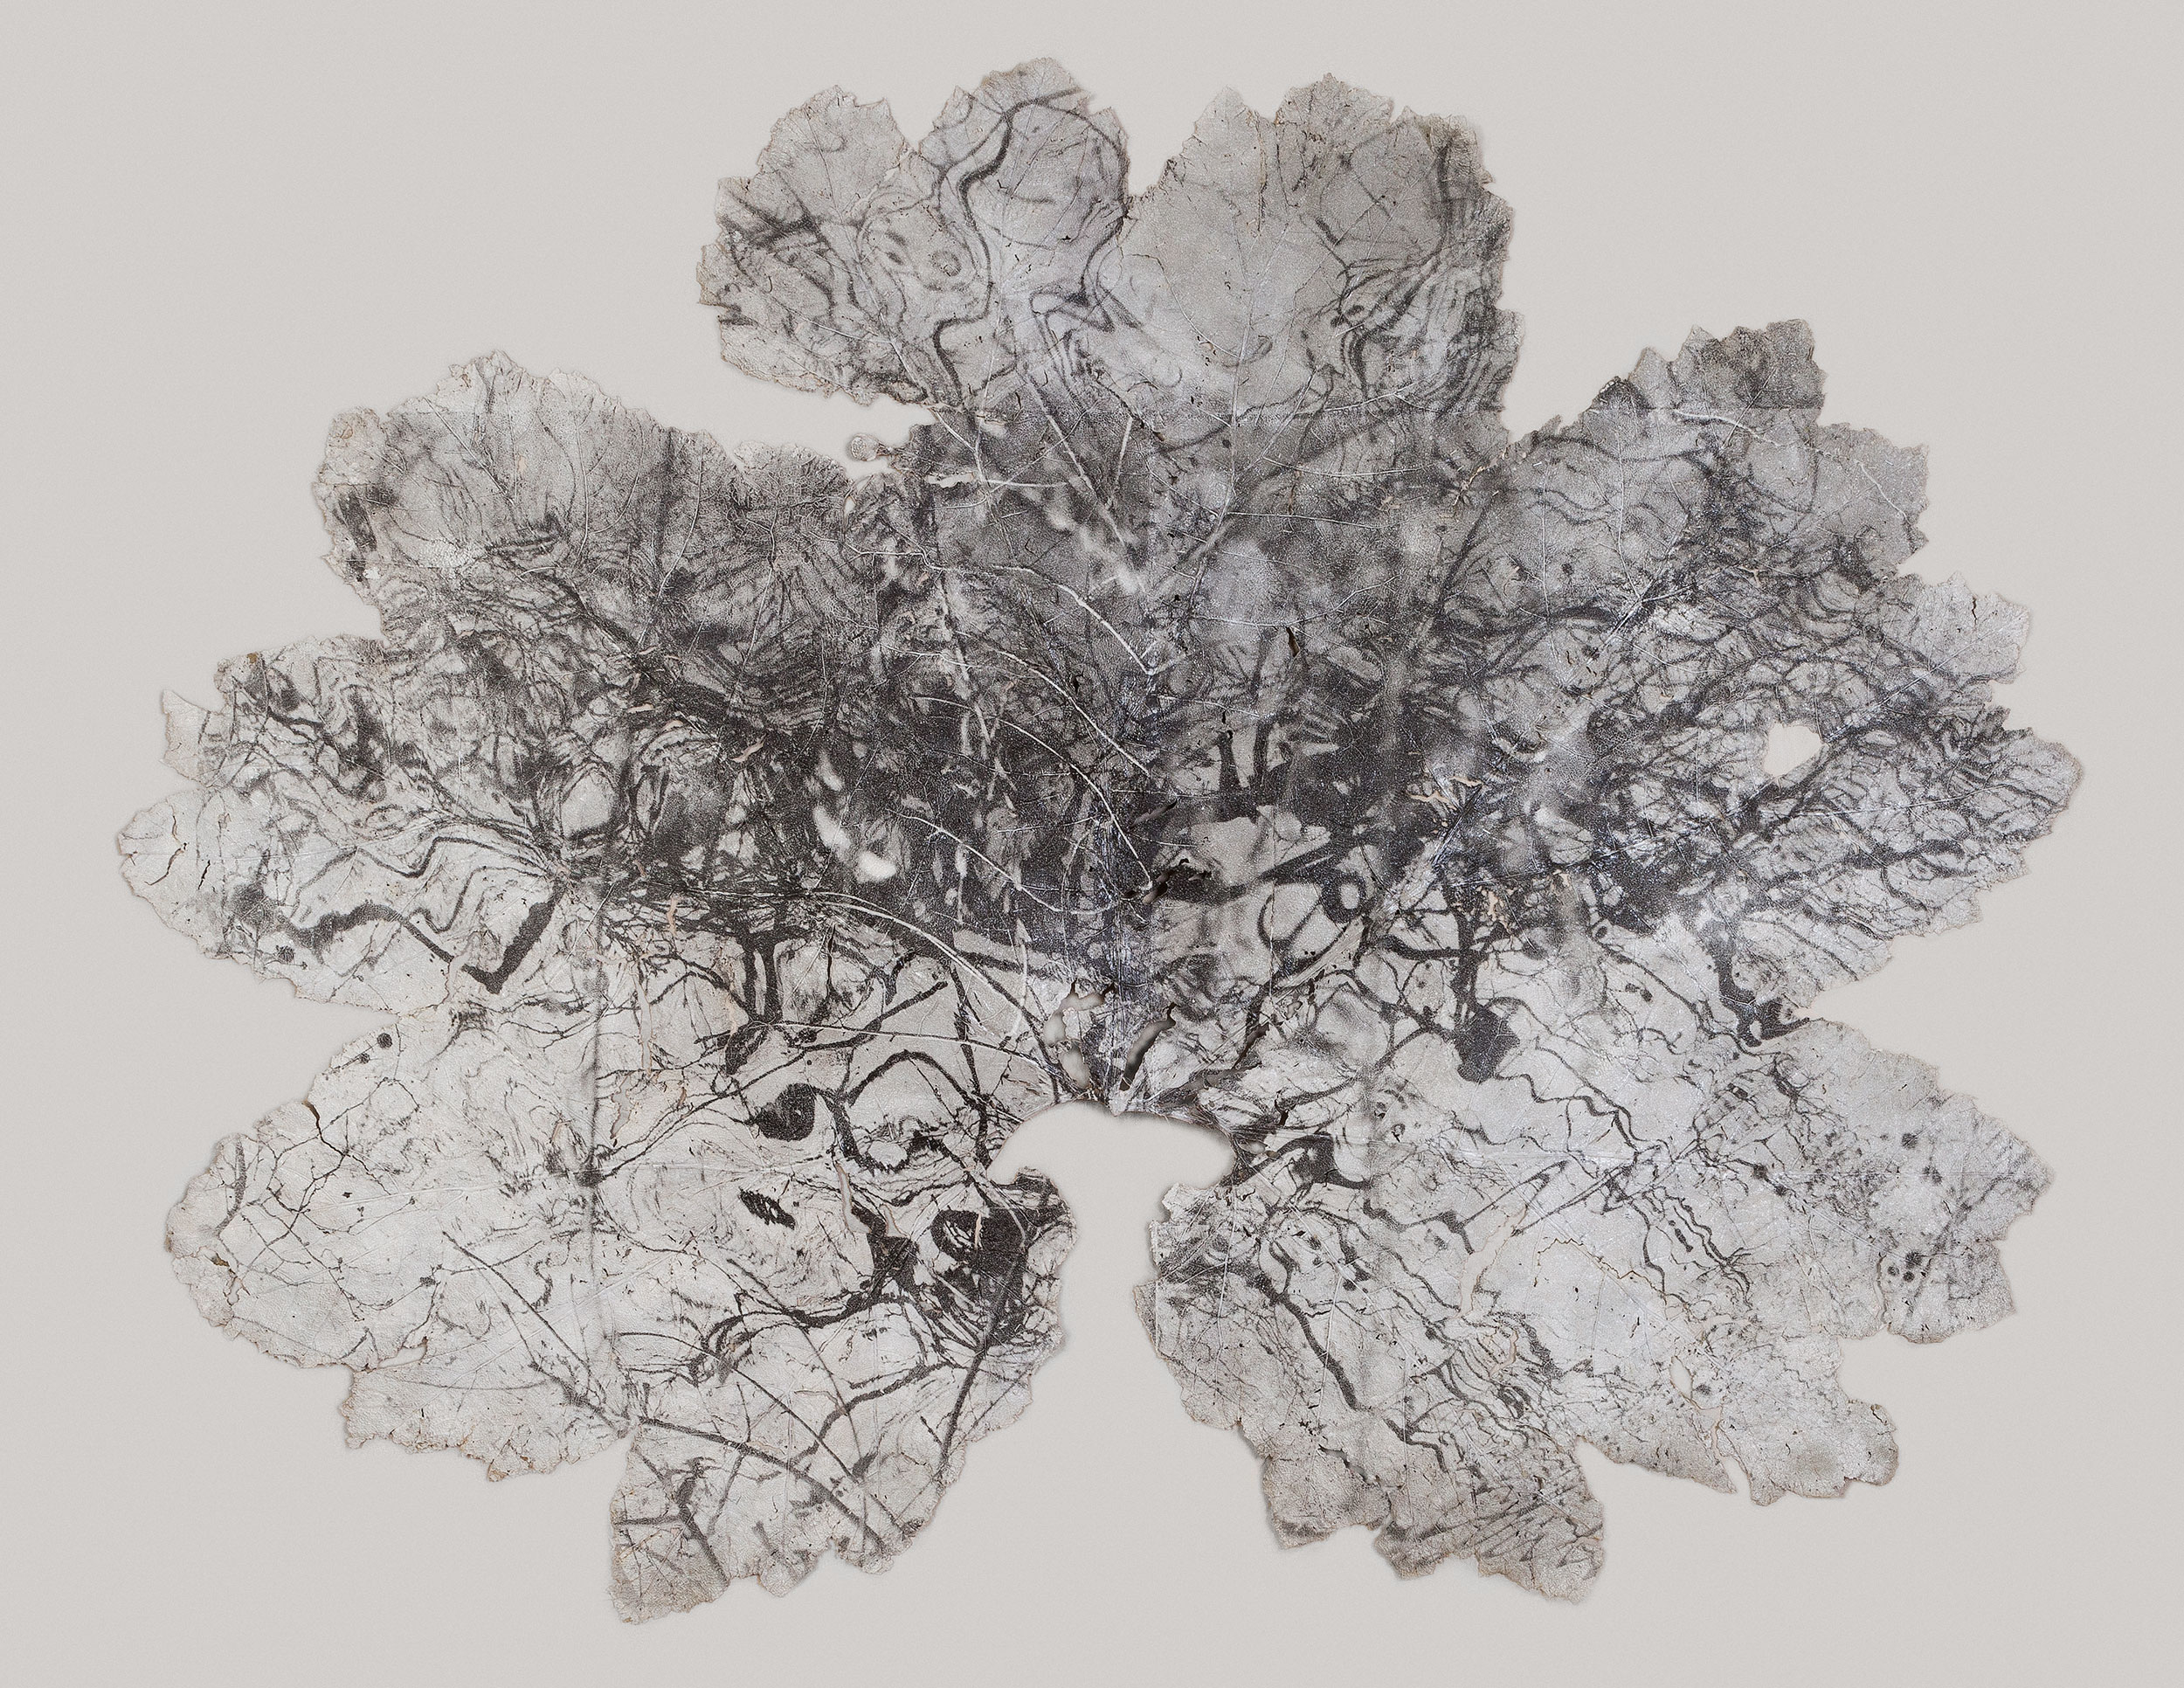 Silver gelatin print on Gunnera Manicata leaf - Untitled - 220cm x 200cm - Dominique Lacloche